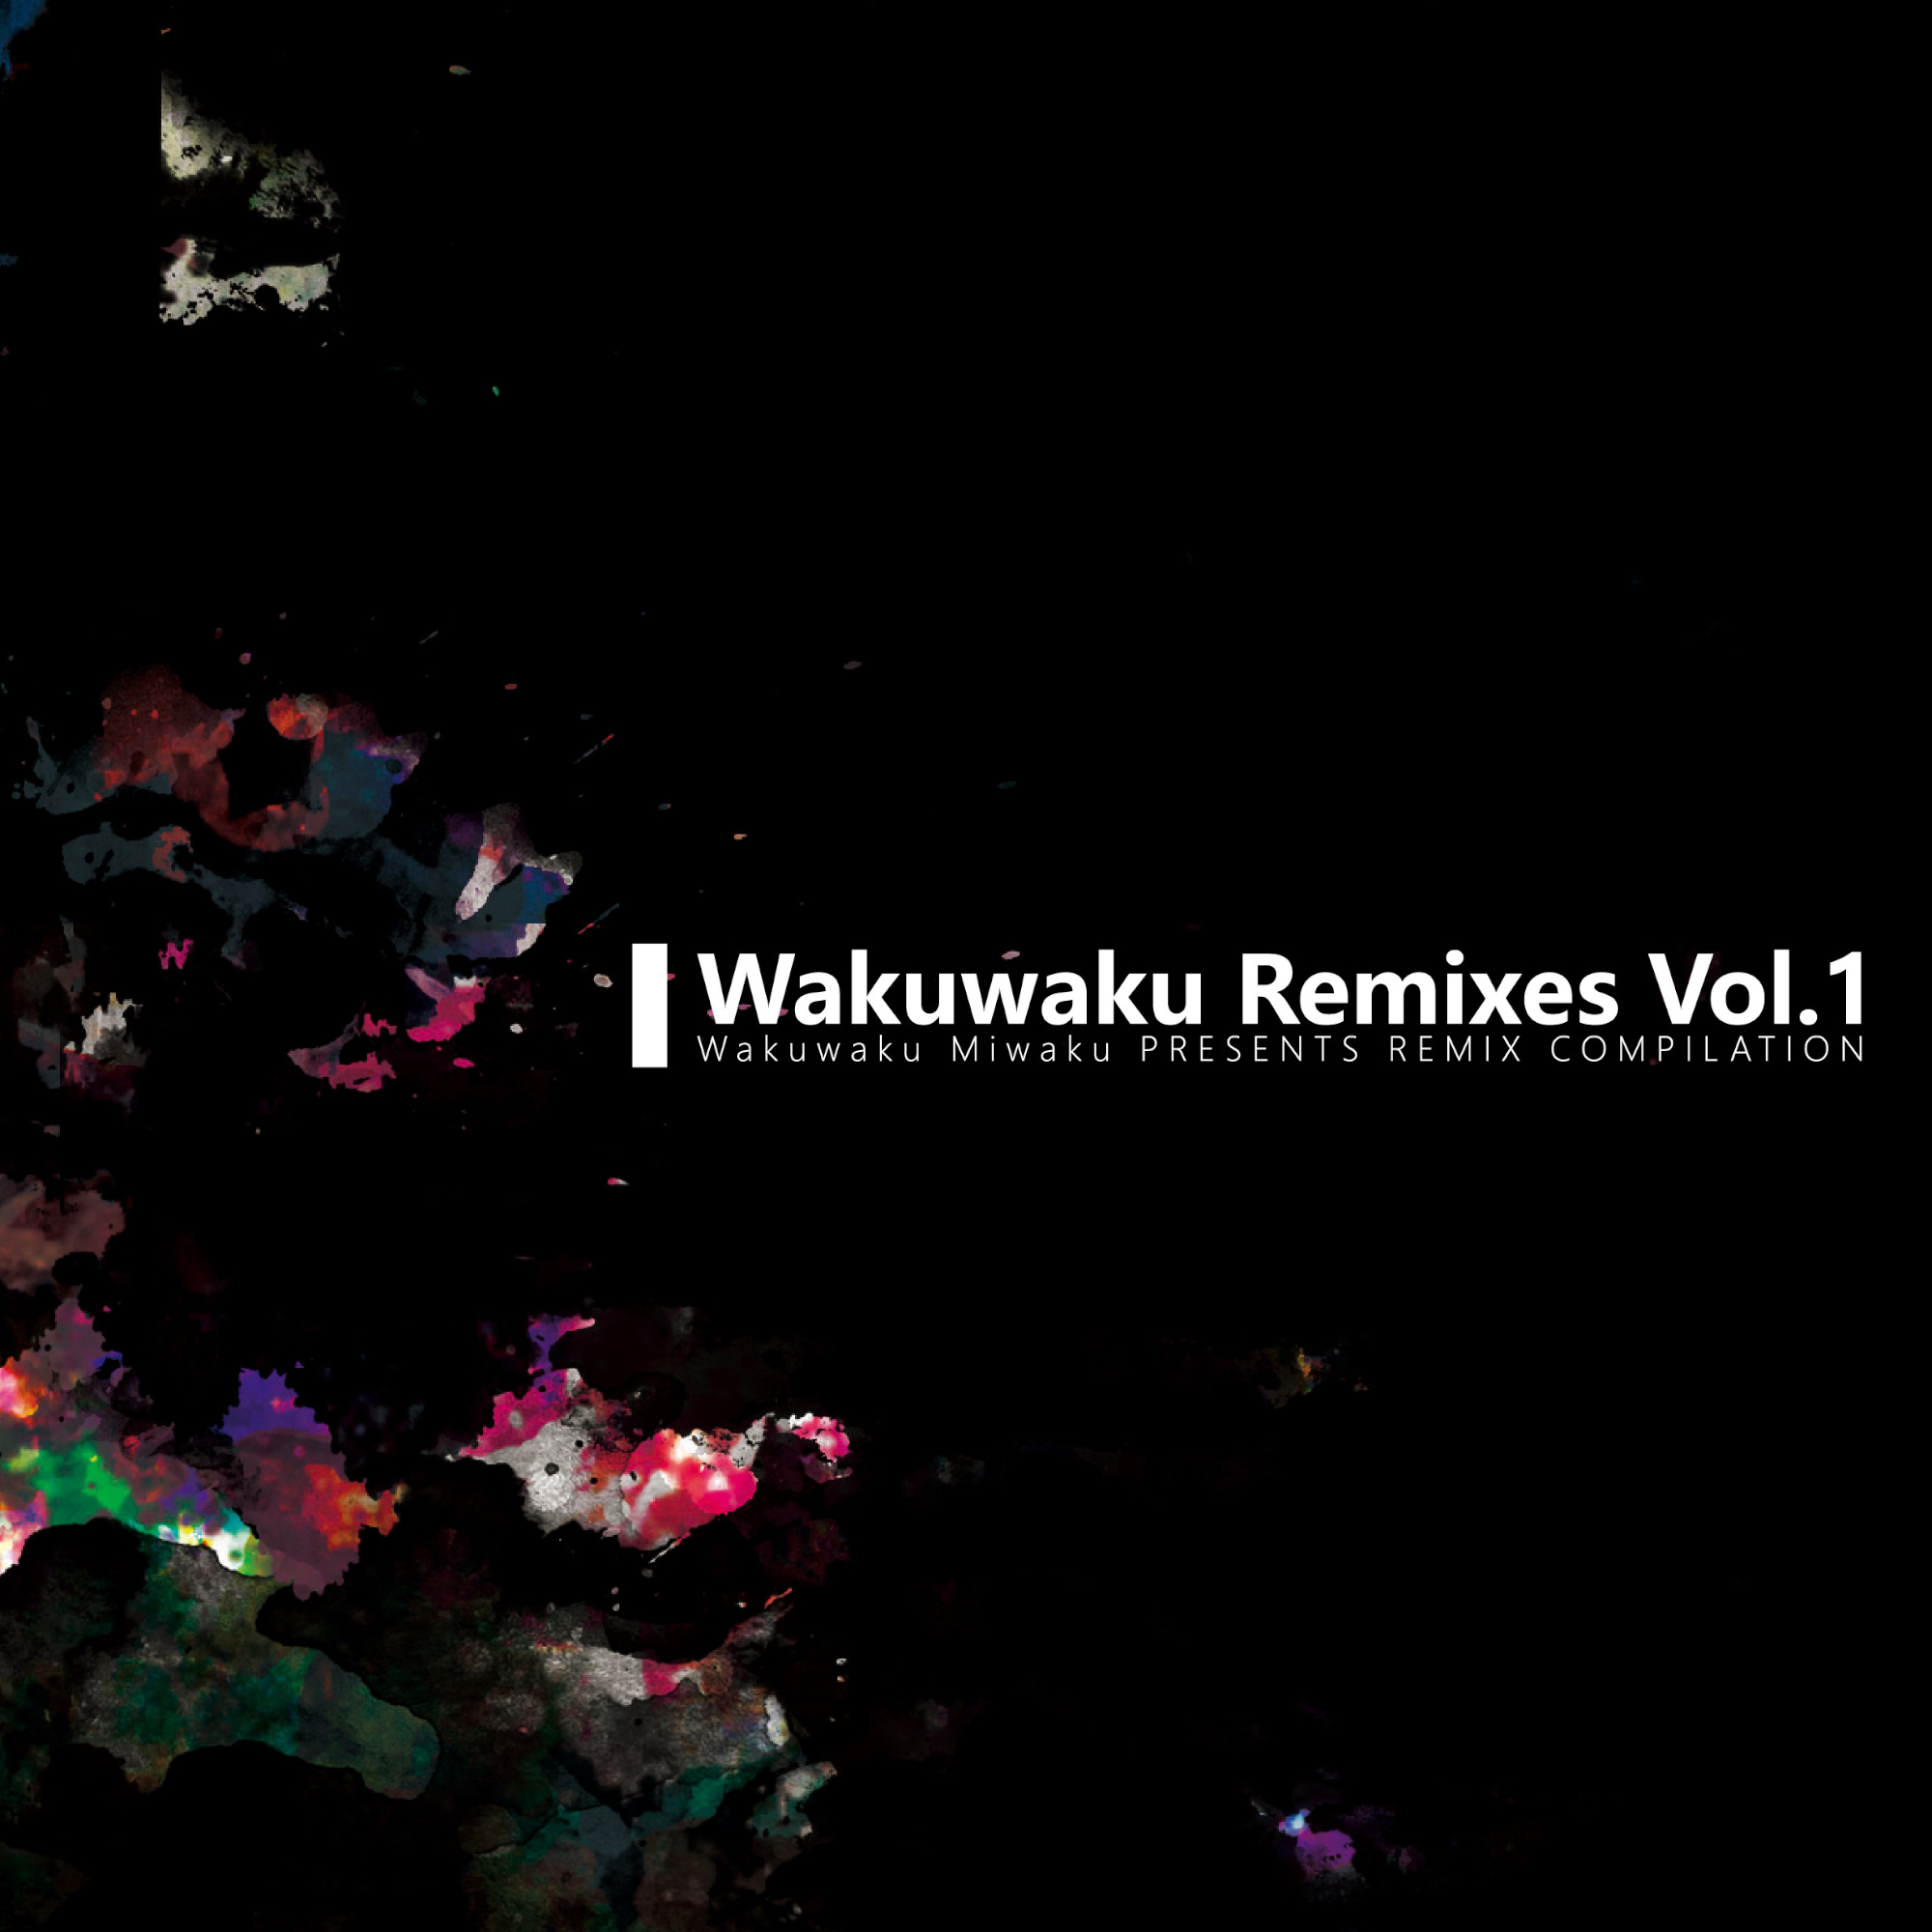 Wakuwaku Remixes Vol.1